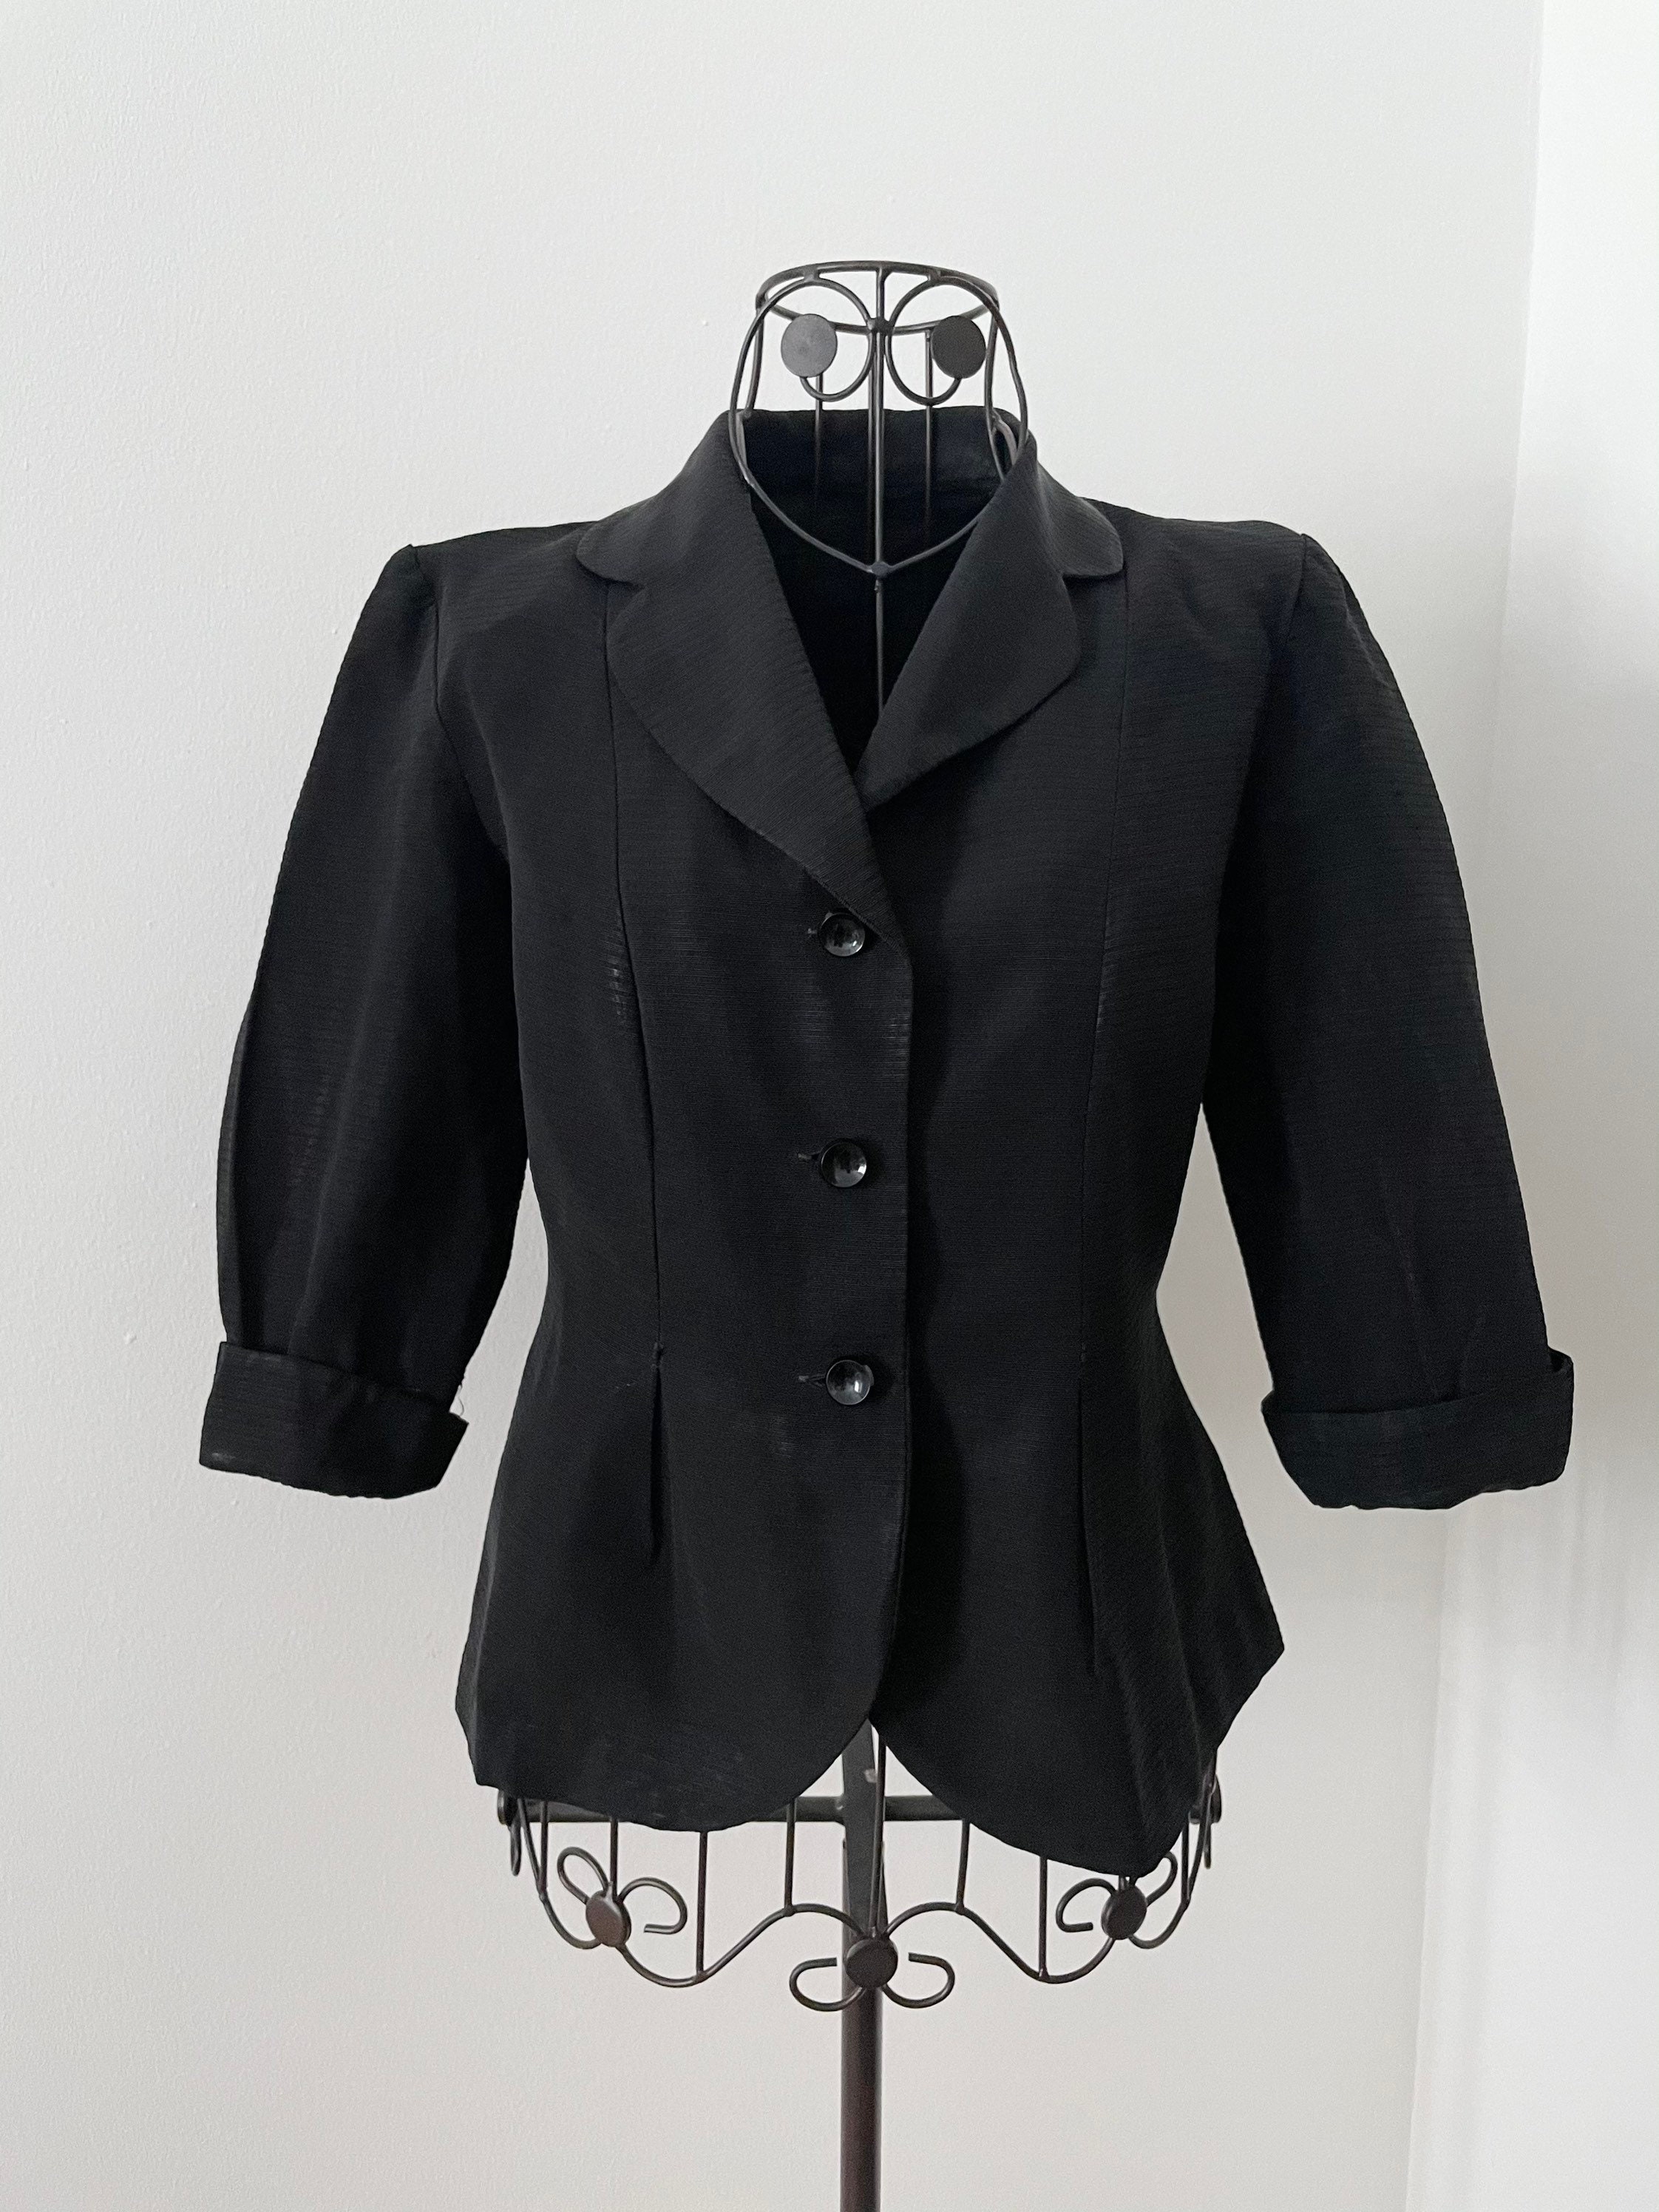 Antique 1930s black jacket vintage blazer | Etsy